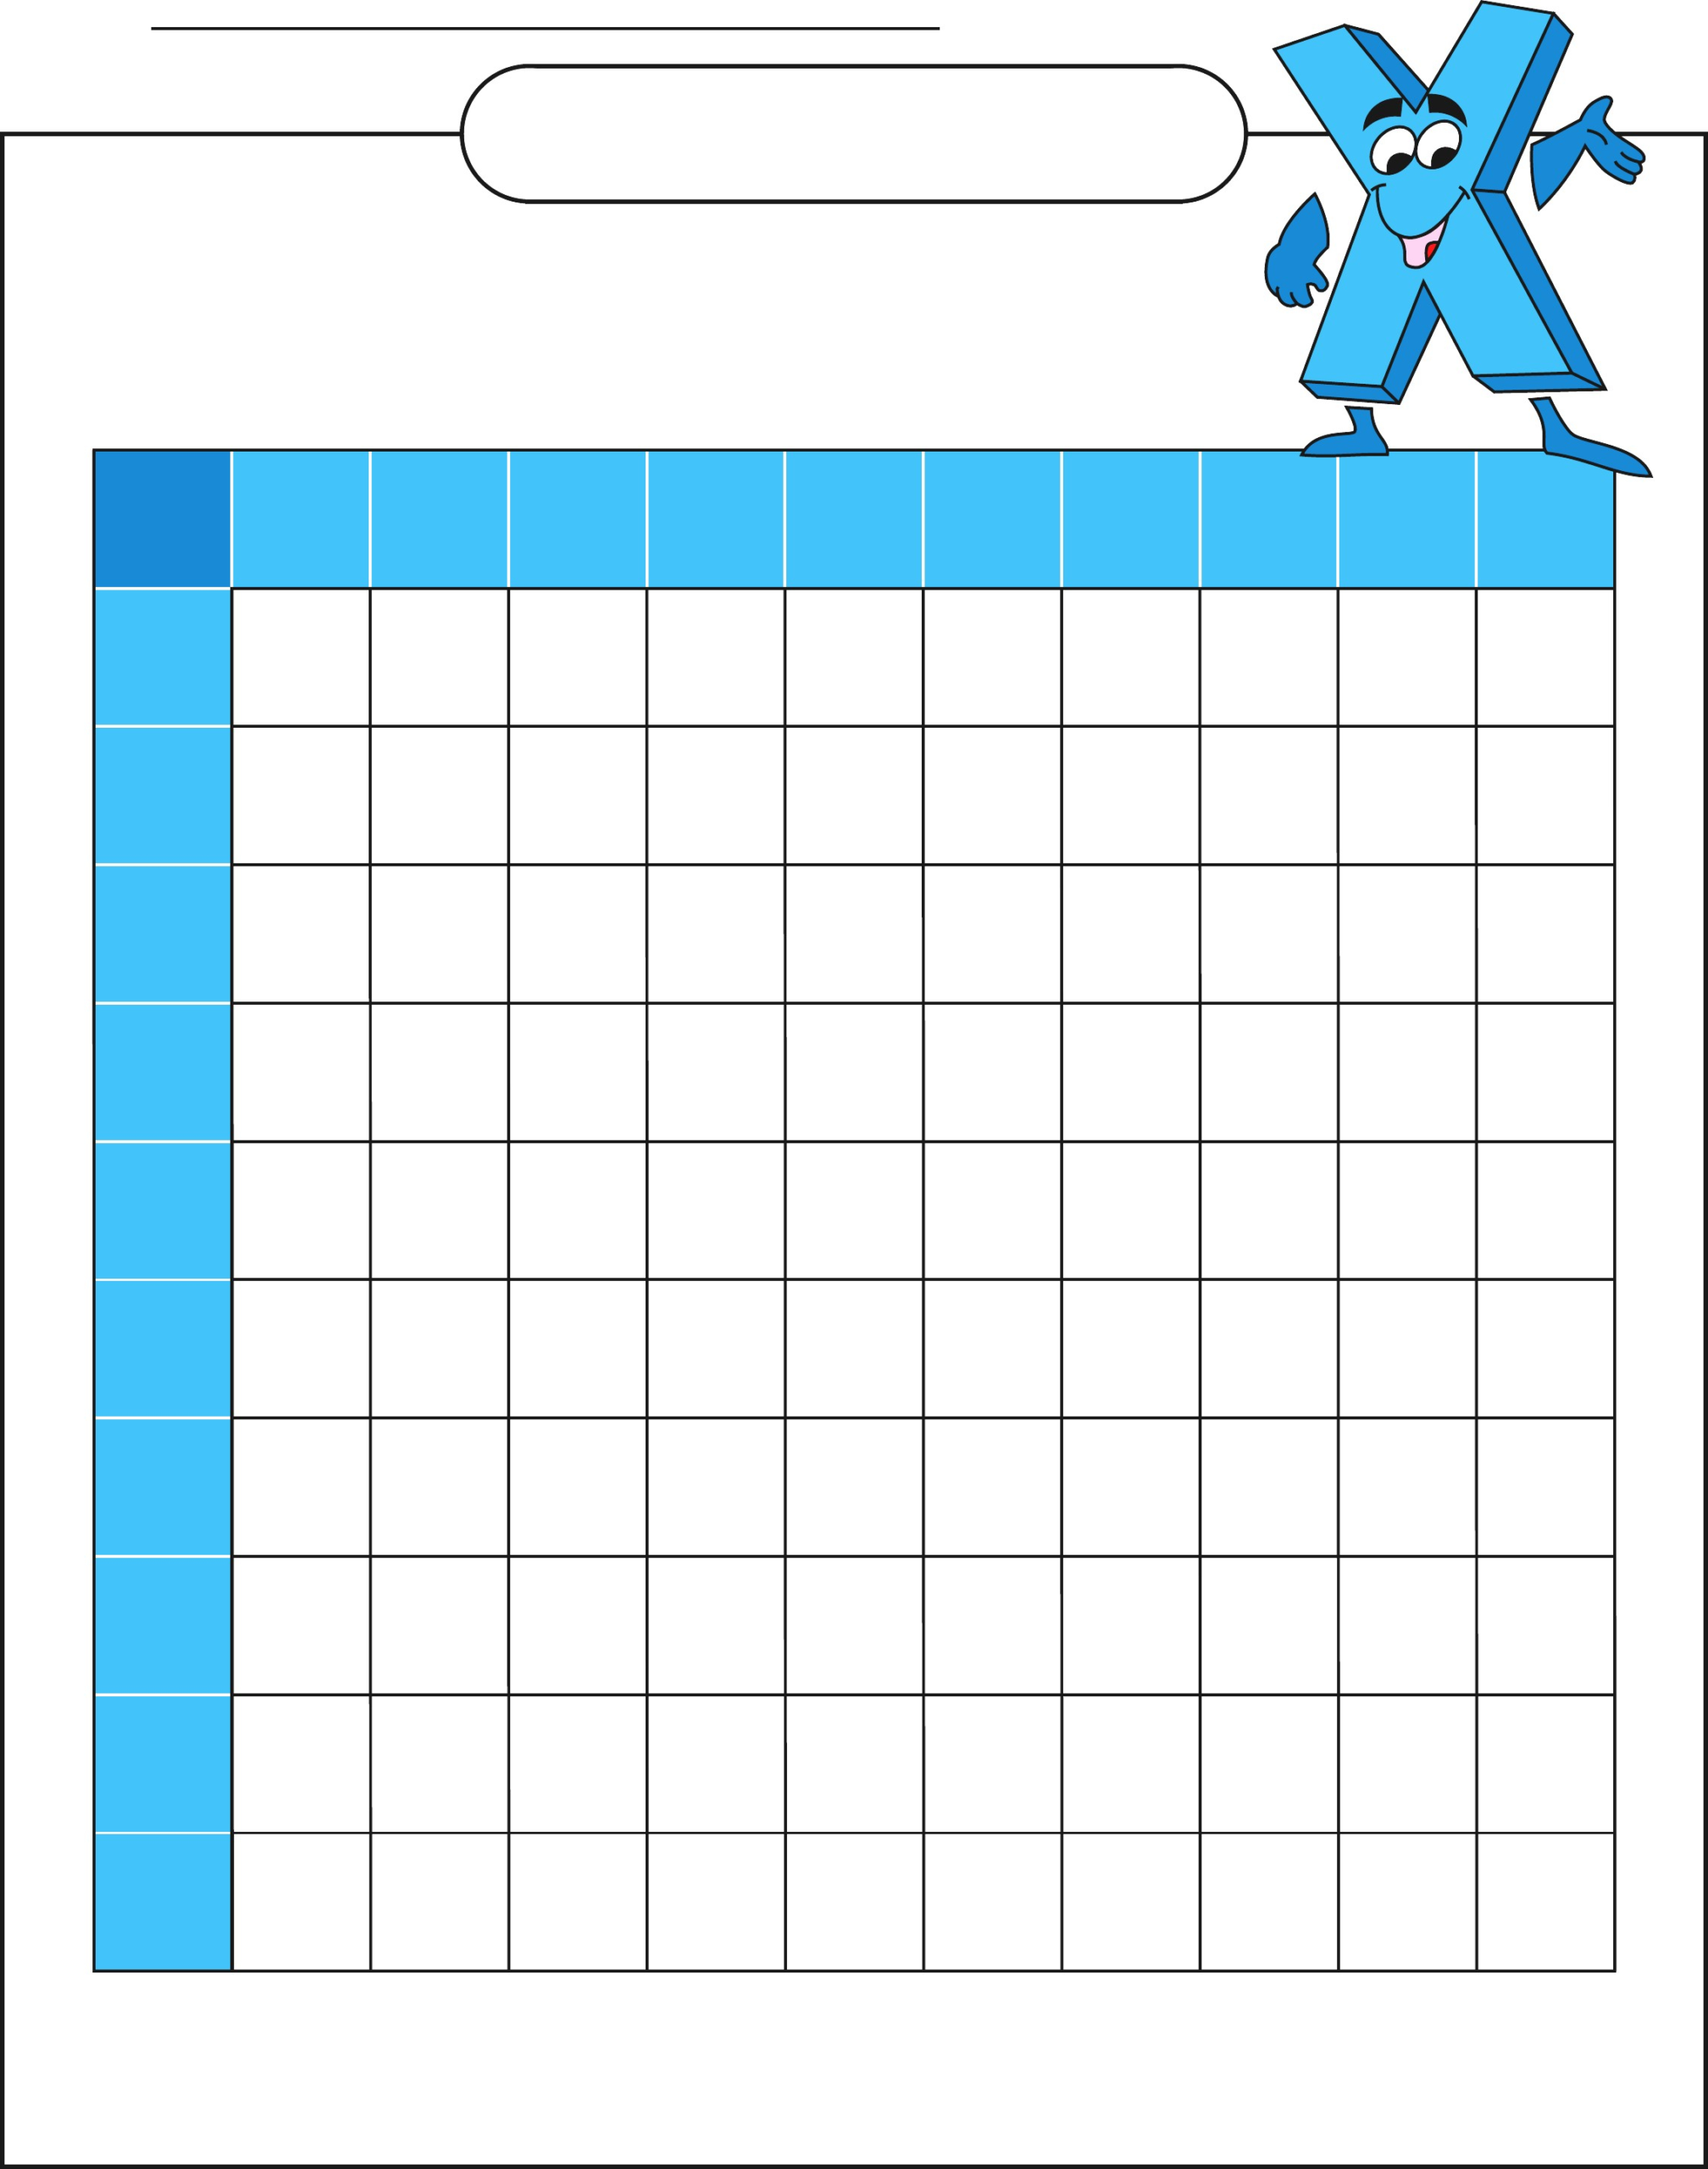 Printable Blank Multiplication Table 0-12 – PrintableMultiplication.com